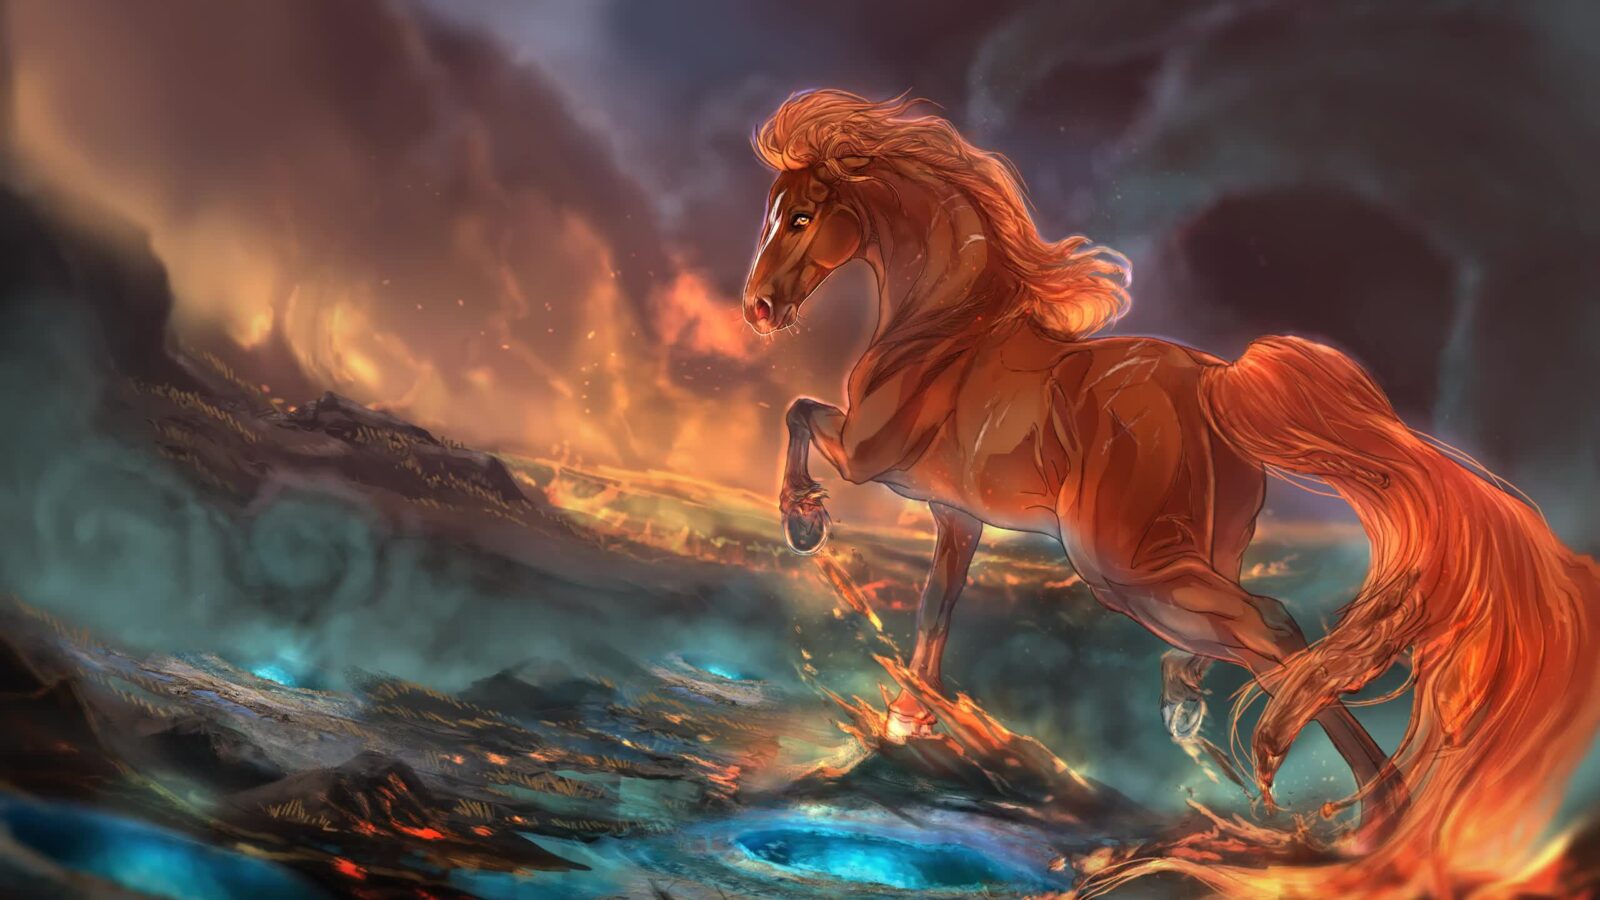 LiveWallpapers4Free.com | Fantasy Horse Unicorn Sea 2K - Free Live Wallpaper